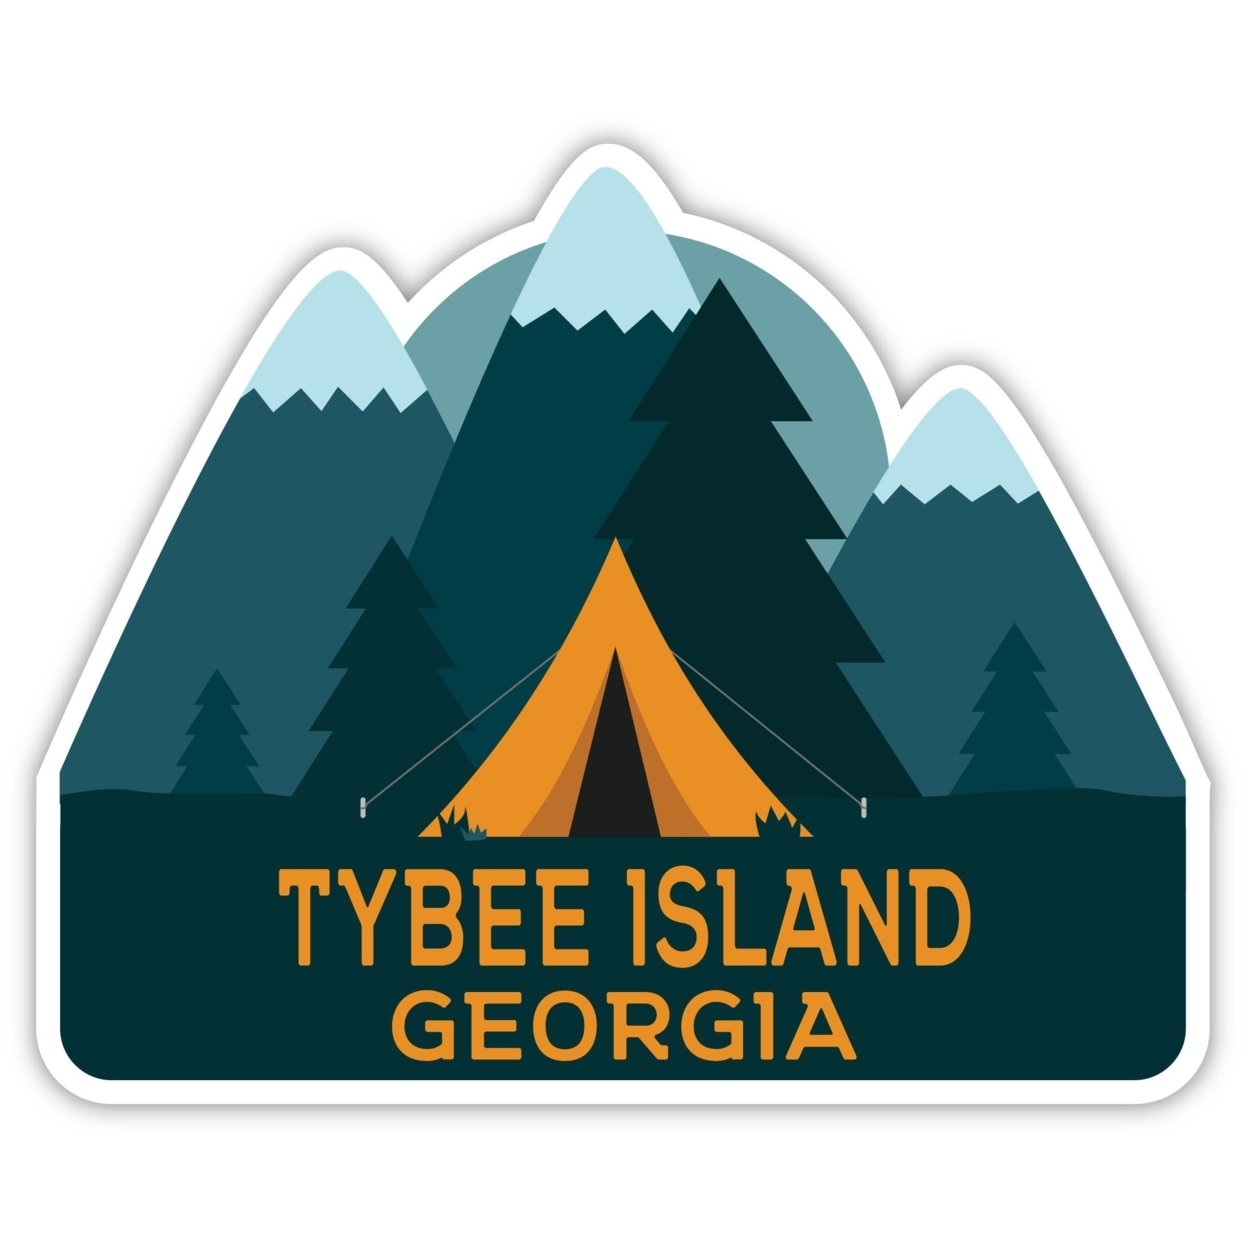 Tybee Island Georgia Souvenir Decorative Stickers (Choose Theme And Size) - Single Unit, 2-Inch, Camp Life